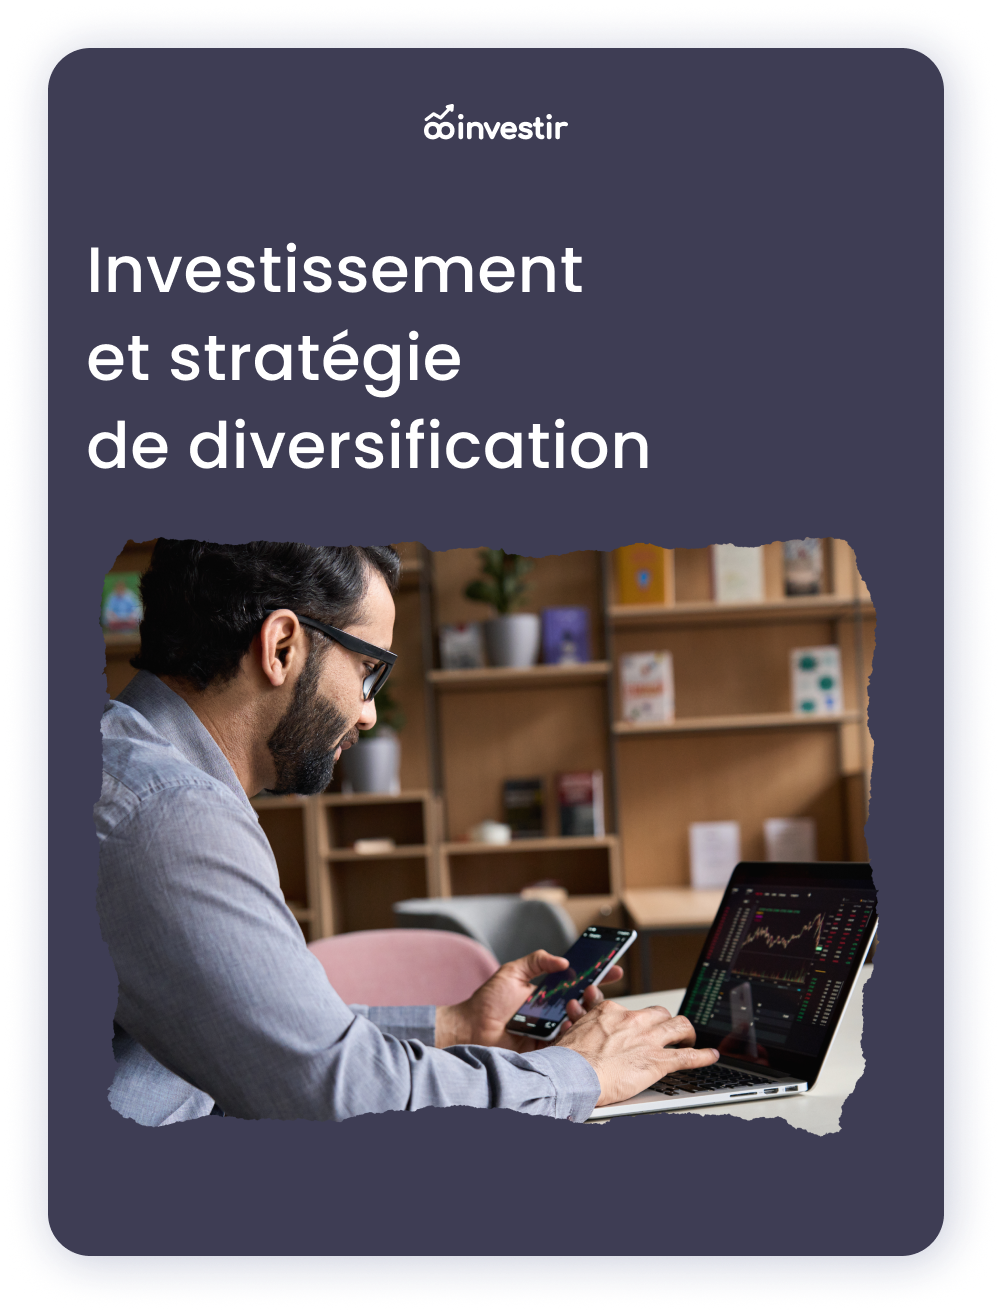 Guide diversifications d'investissement